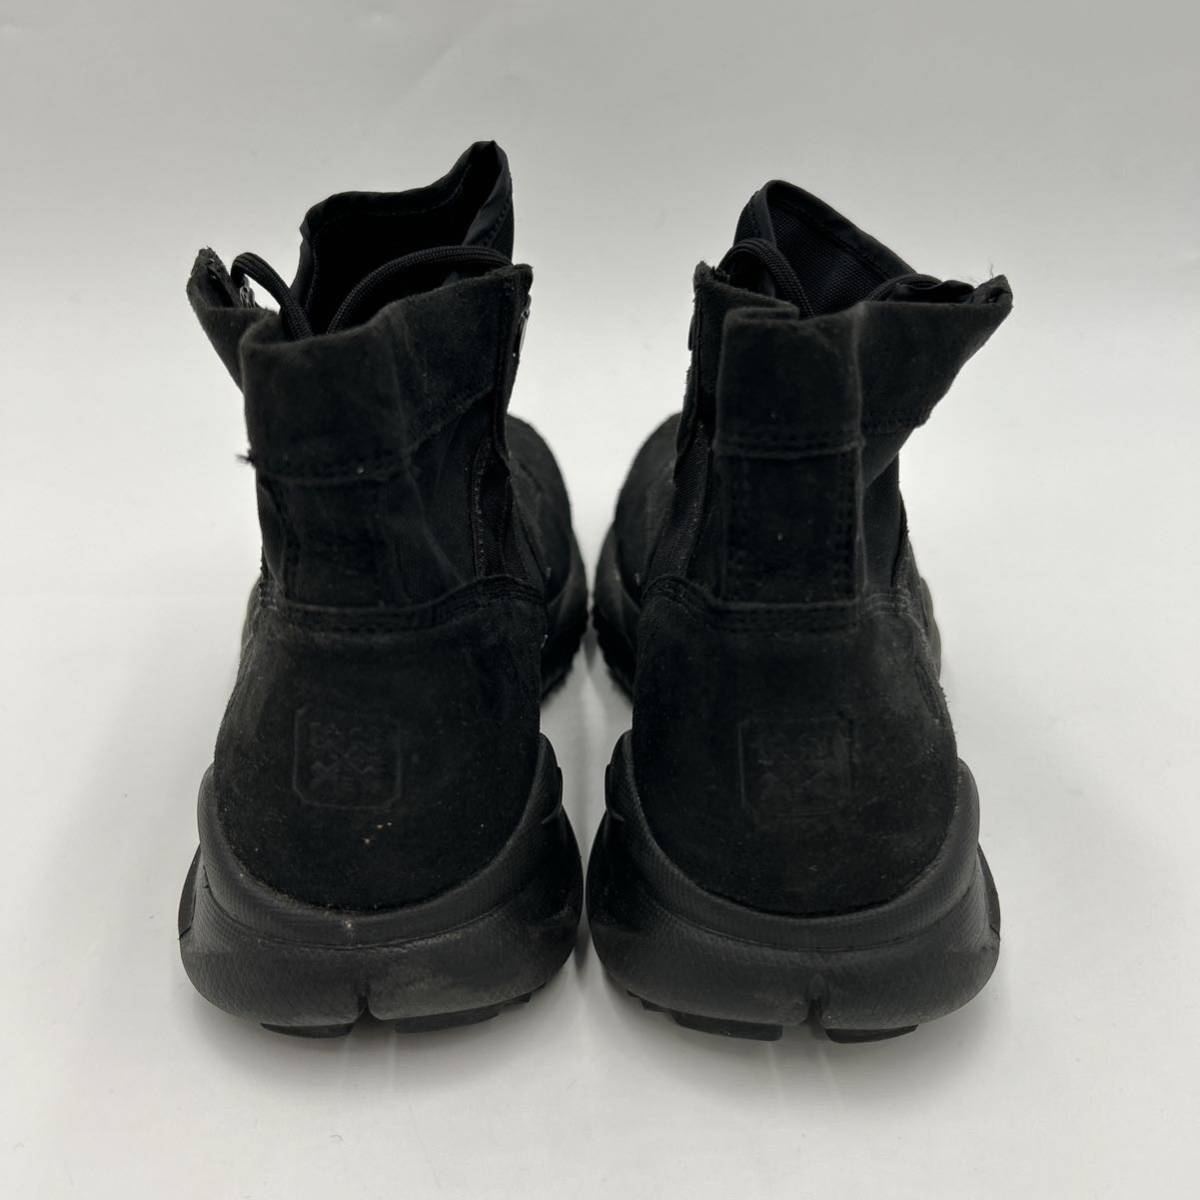 H @ 洗礼されたデザイン '人気モデル' 『NIKE ナイキ』HIGH CUT ハイカット スニーカー 履き心地抜群 メンズ 紳士靴 シューズ BLACK 黒系 _画像5